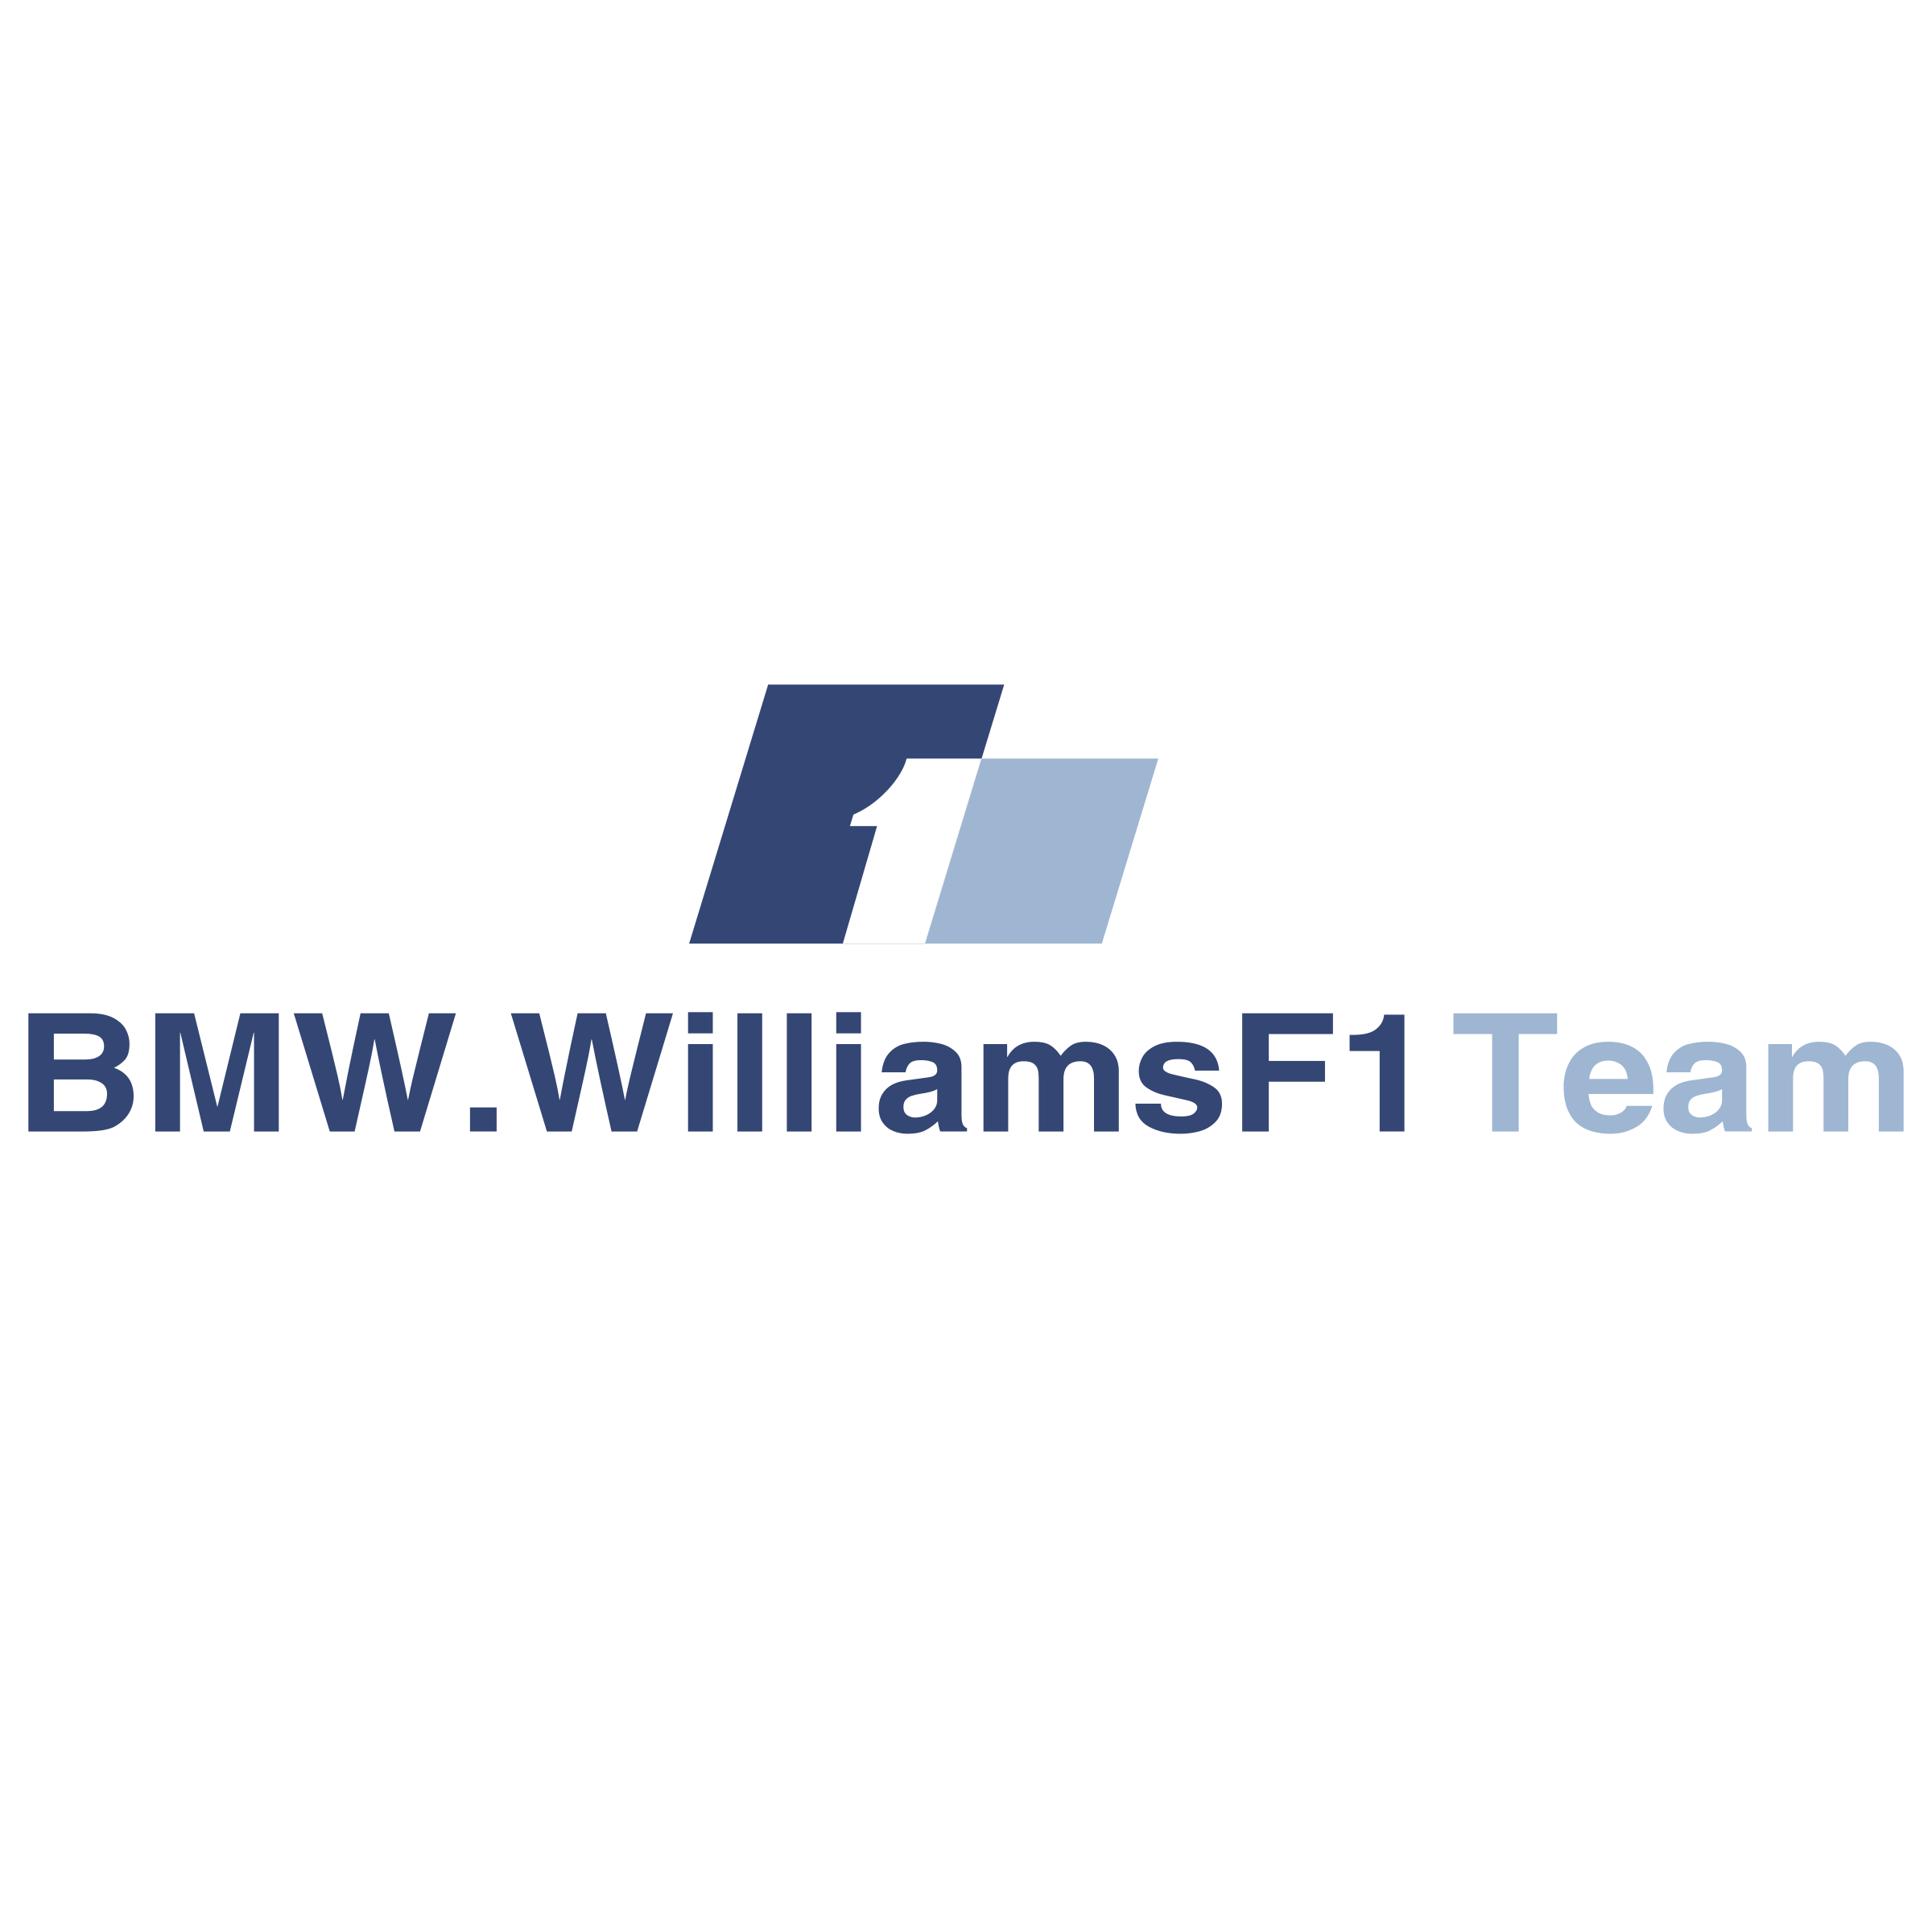 Williams F1 Logo - BMW Williams F1 Team 01 Logo PNG Transparent & SVG Vector - Freebie ...